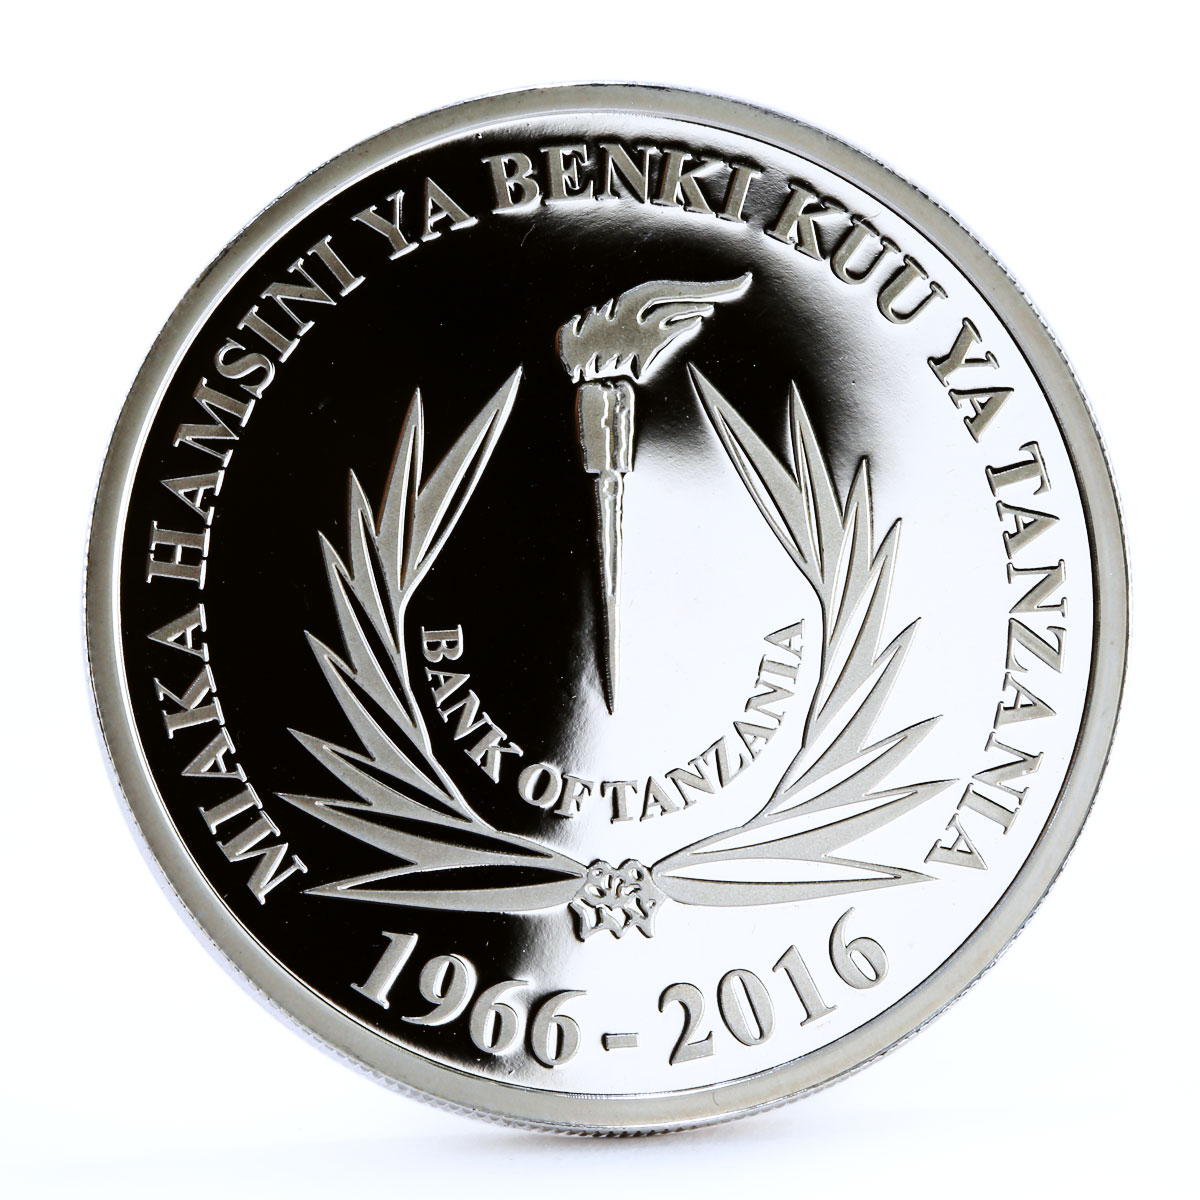 Tanzania 50000 shillings Central Bank Building City Landscape silver coin 2016